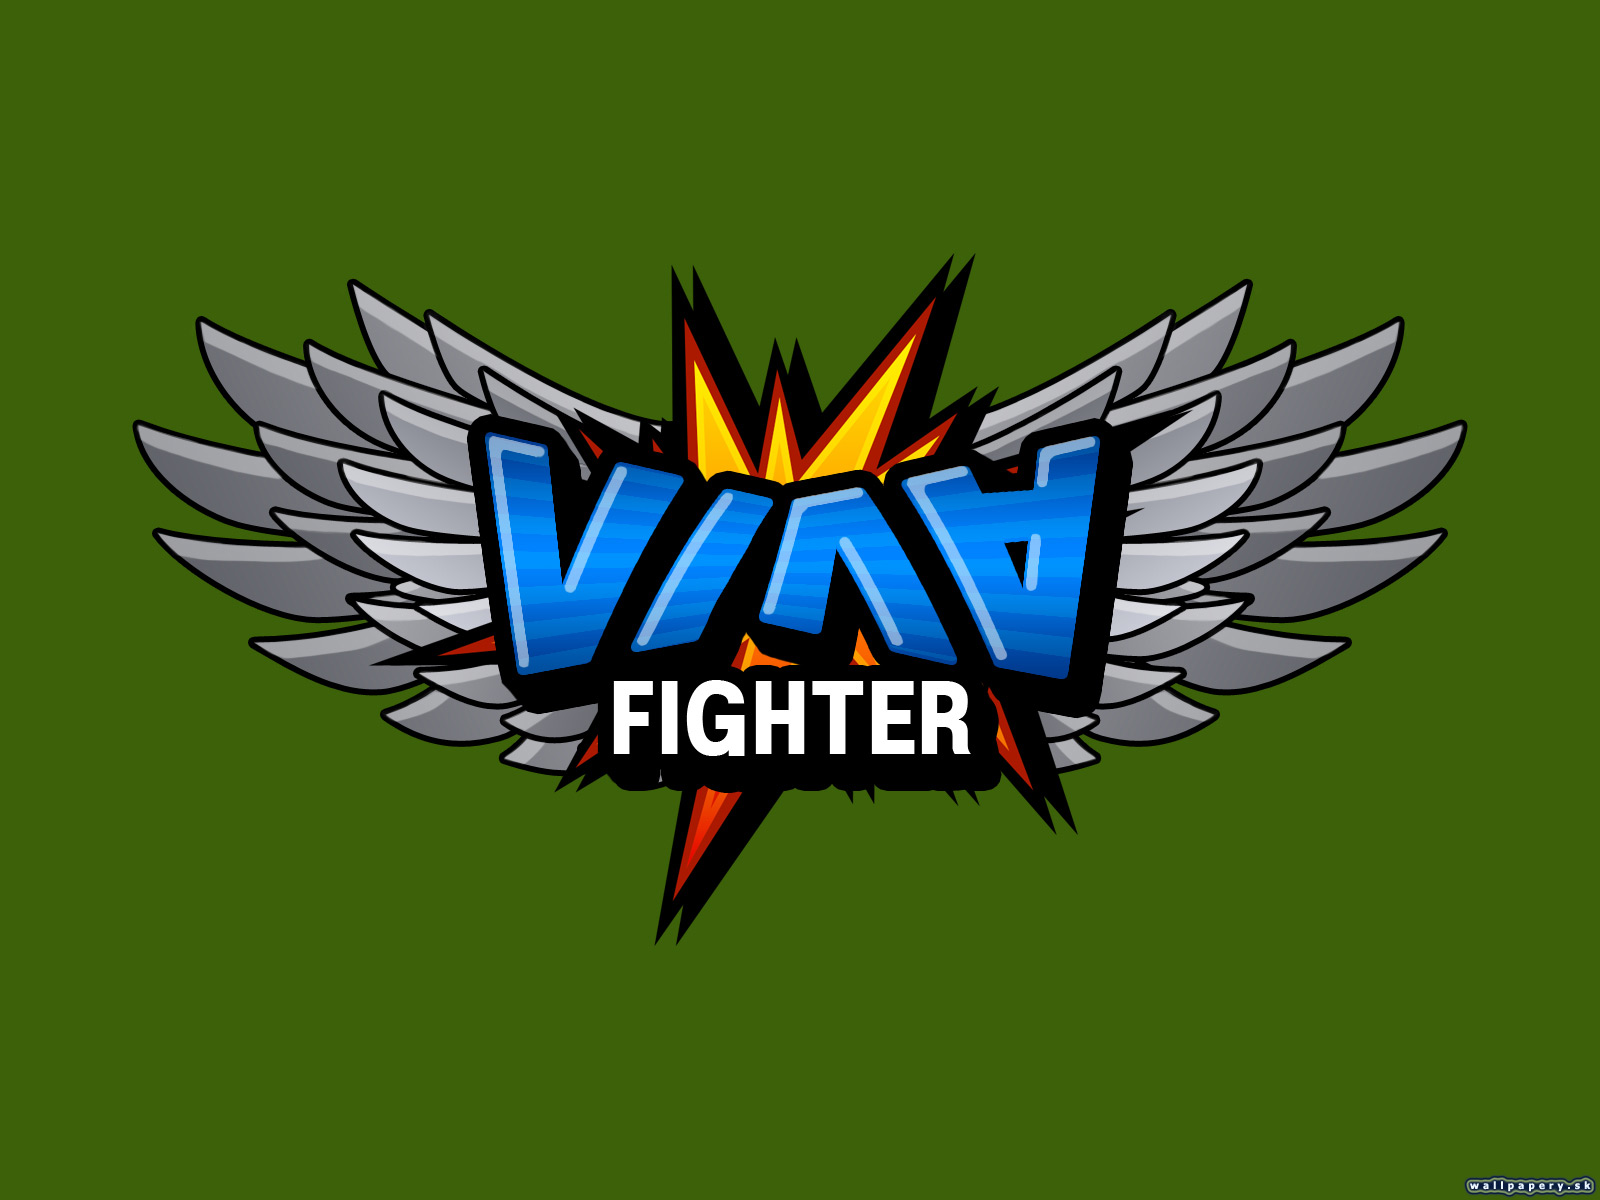 VIVA Fighter - wallpaper 1